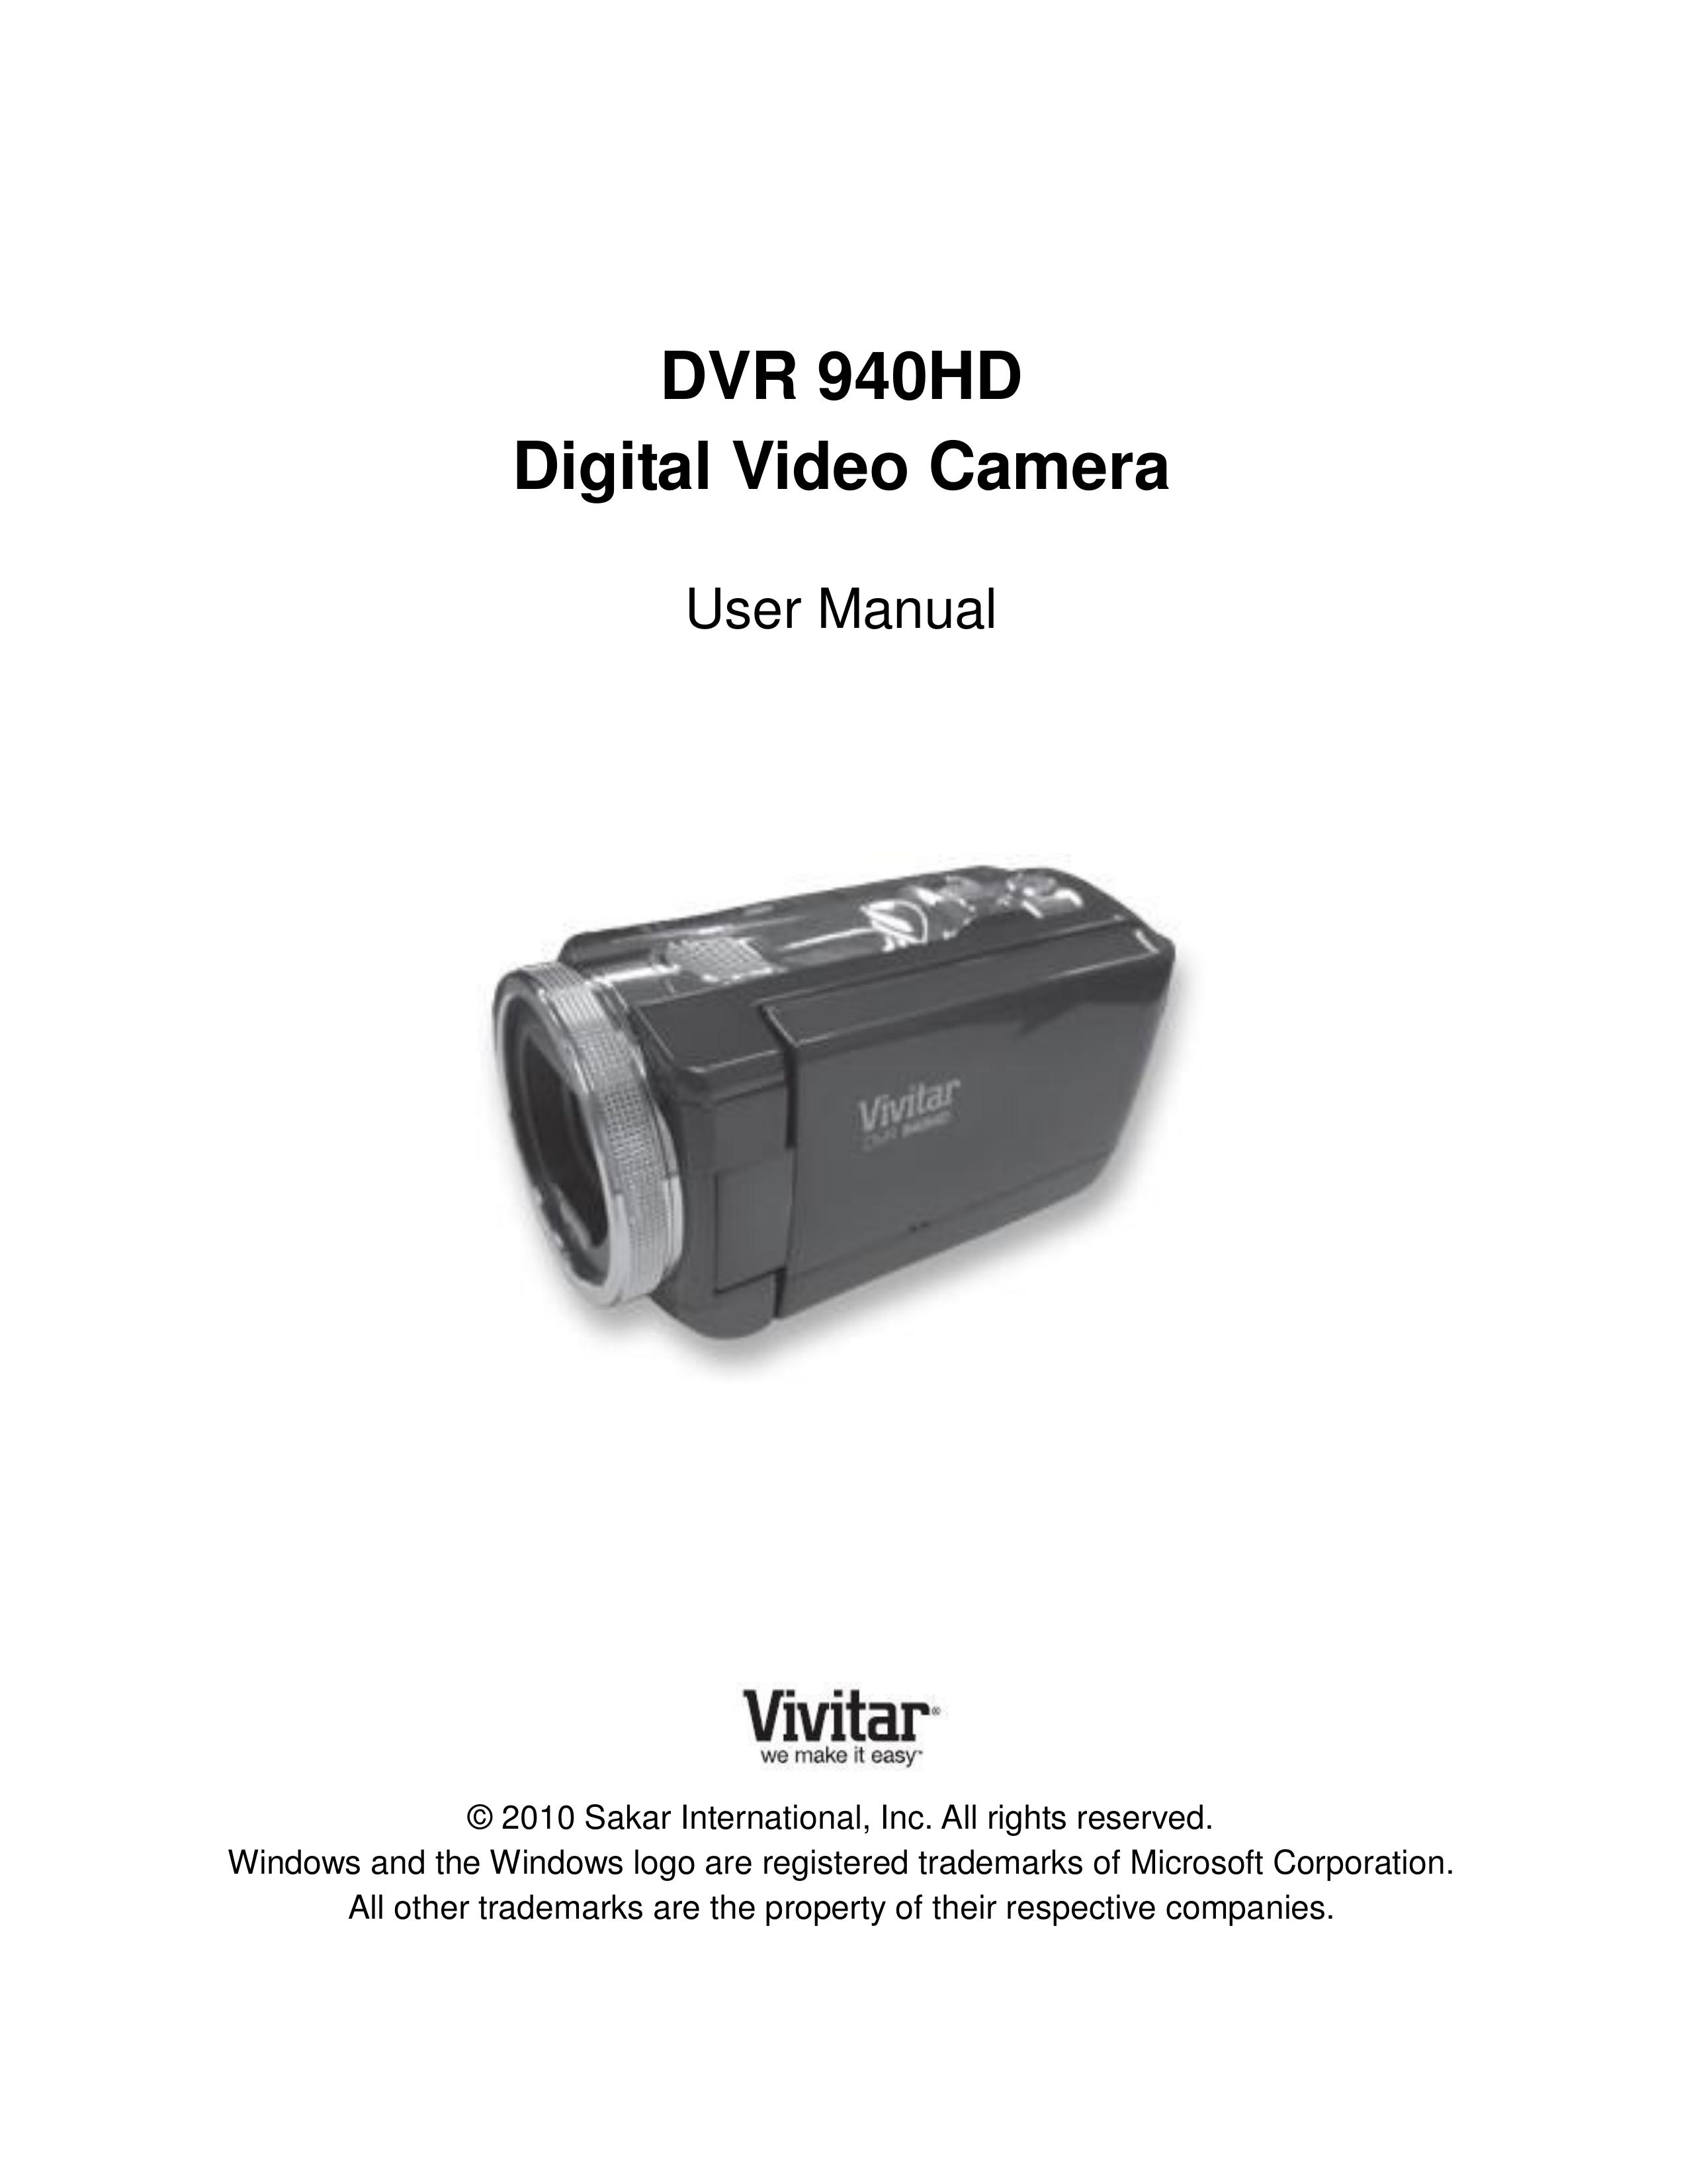 Vivitar DVR 940HD Camcorder User Manual